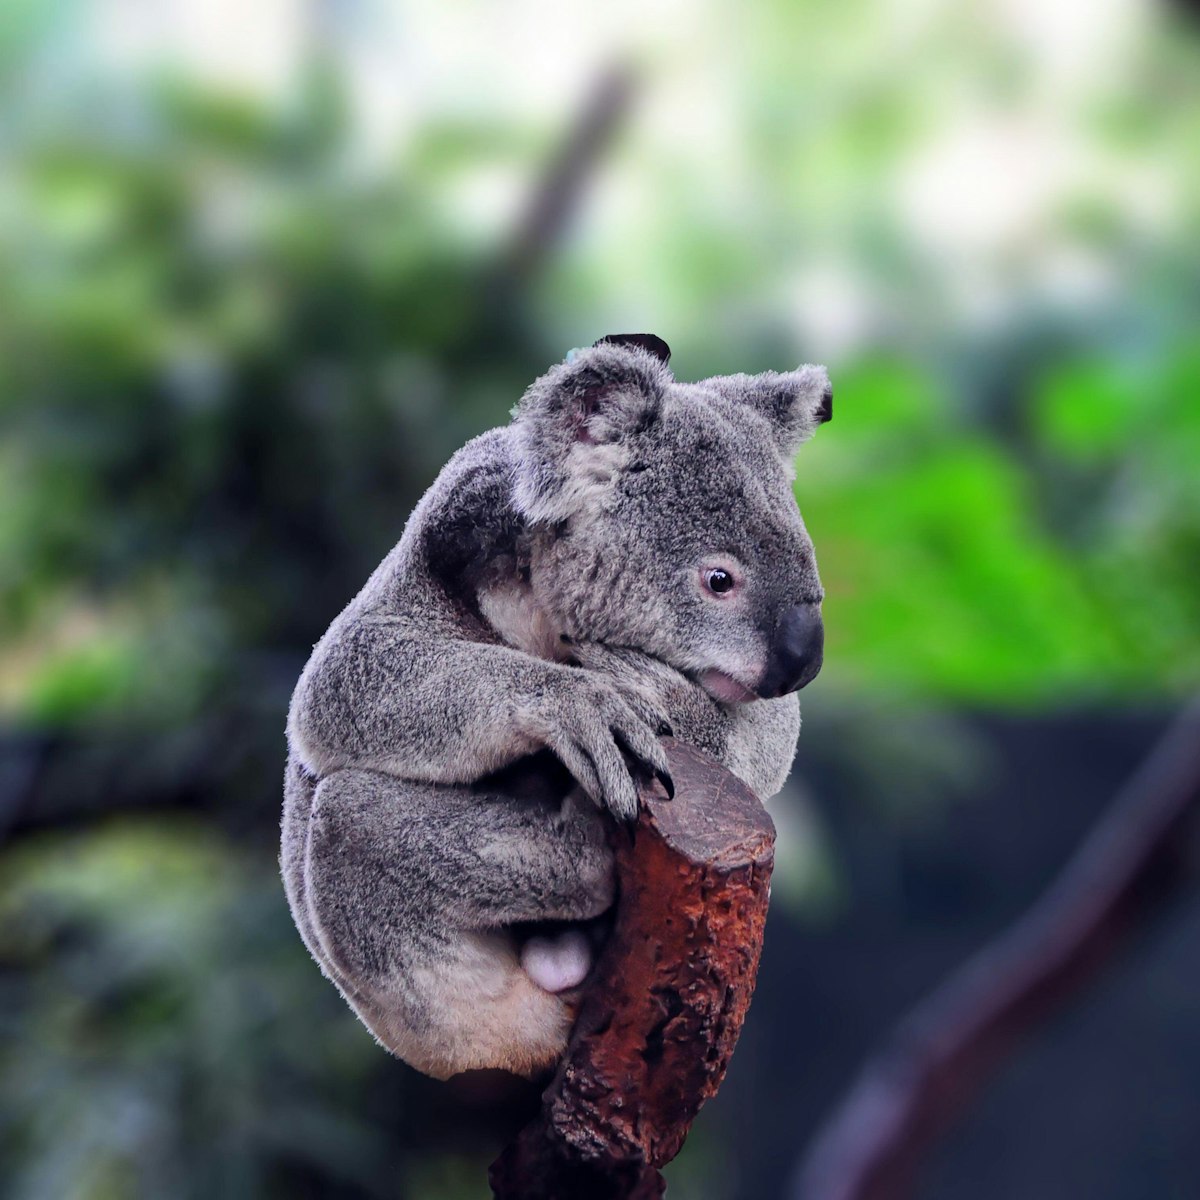 2BFBBX3 Koala, (Phascolarctos cinereus) in Koala Park Sanctuary Sydney ,NSW Australia